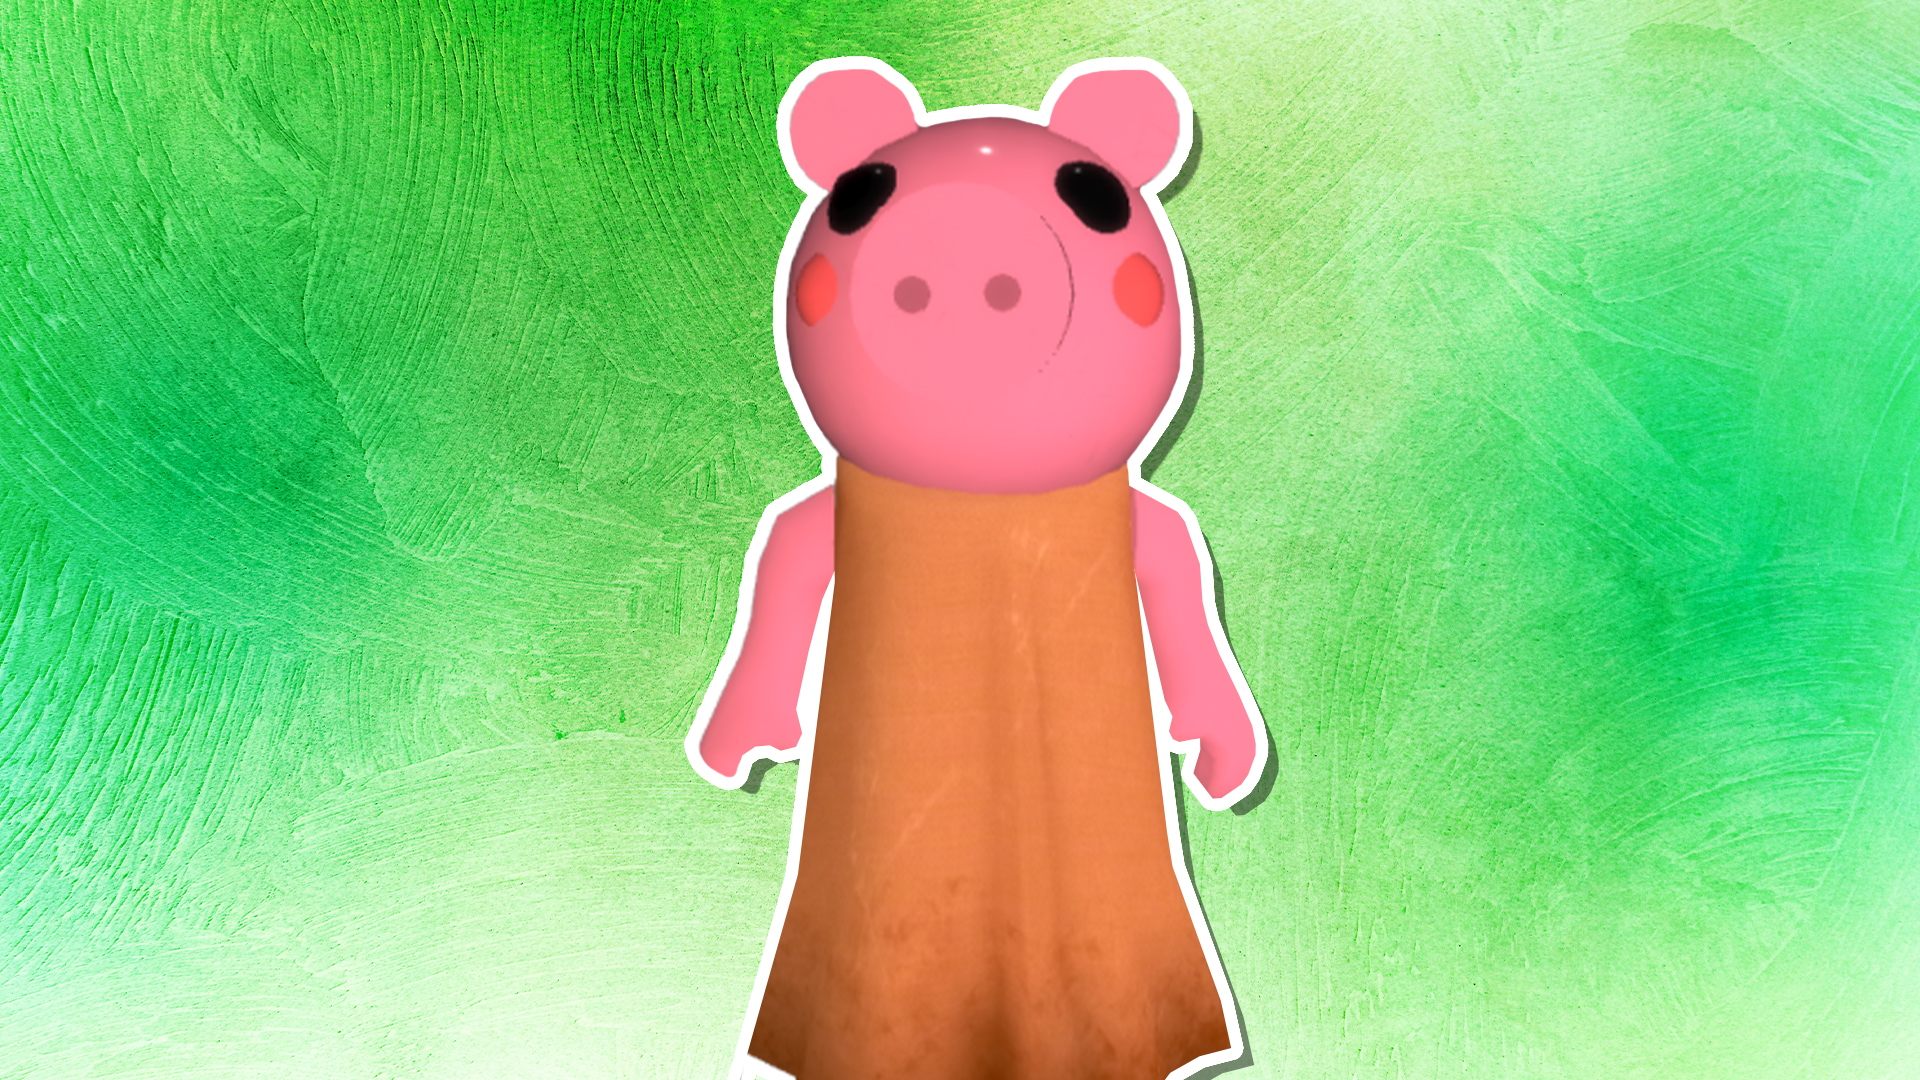 Identifying characters from Piggy-Roblox, Baamboozle - Baamboozle